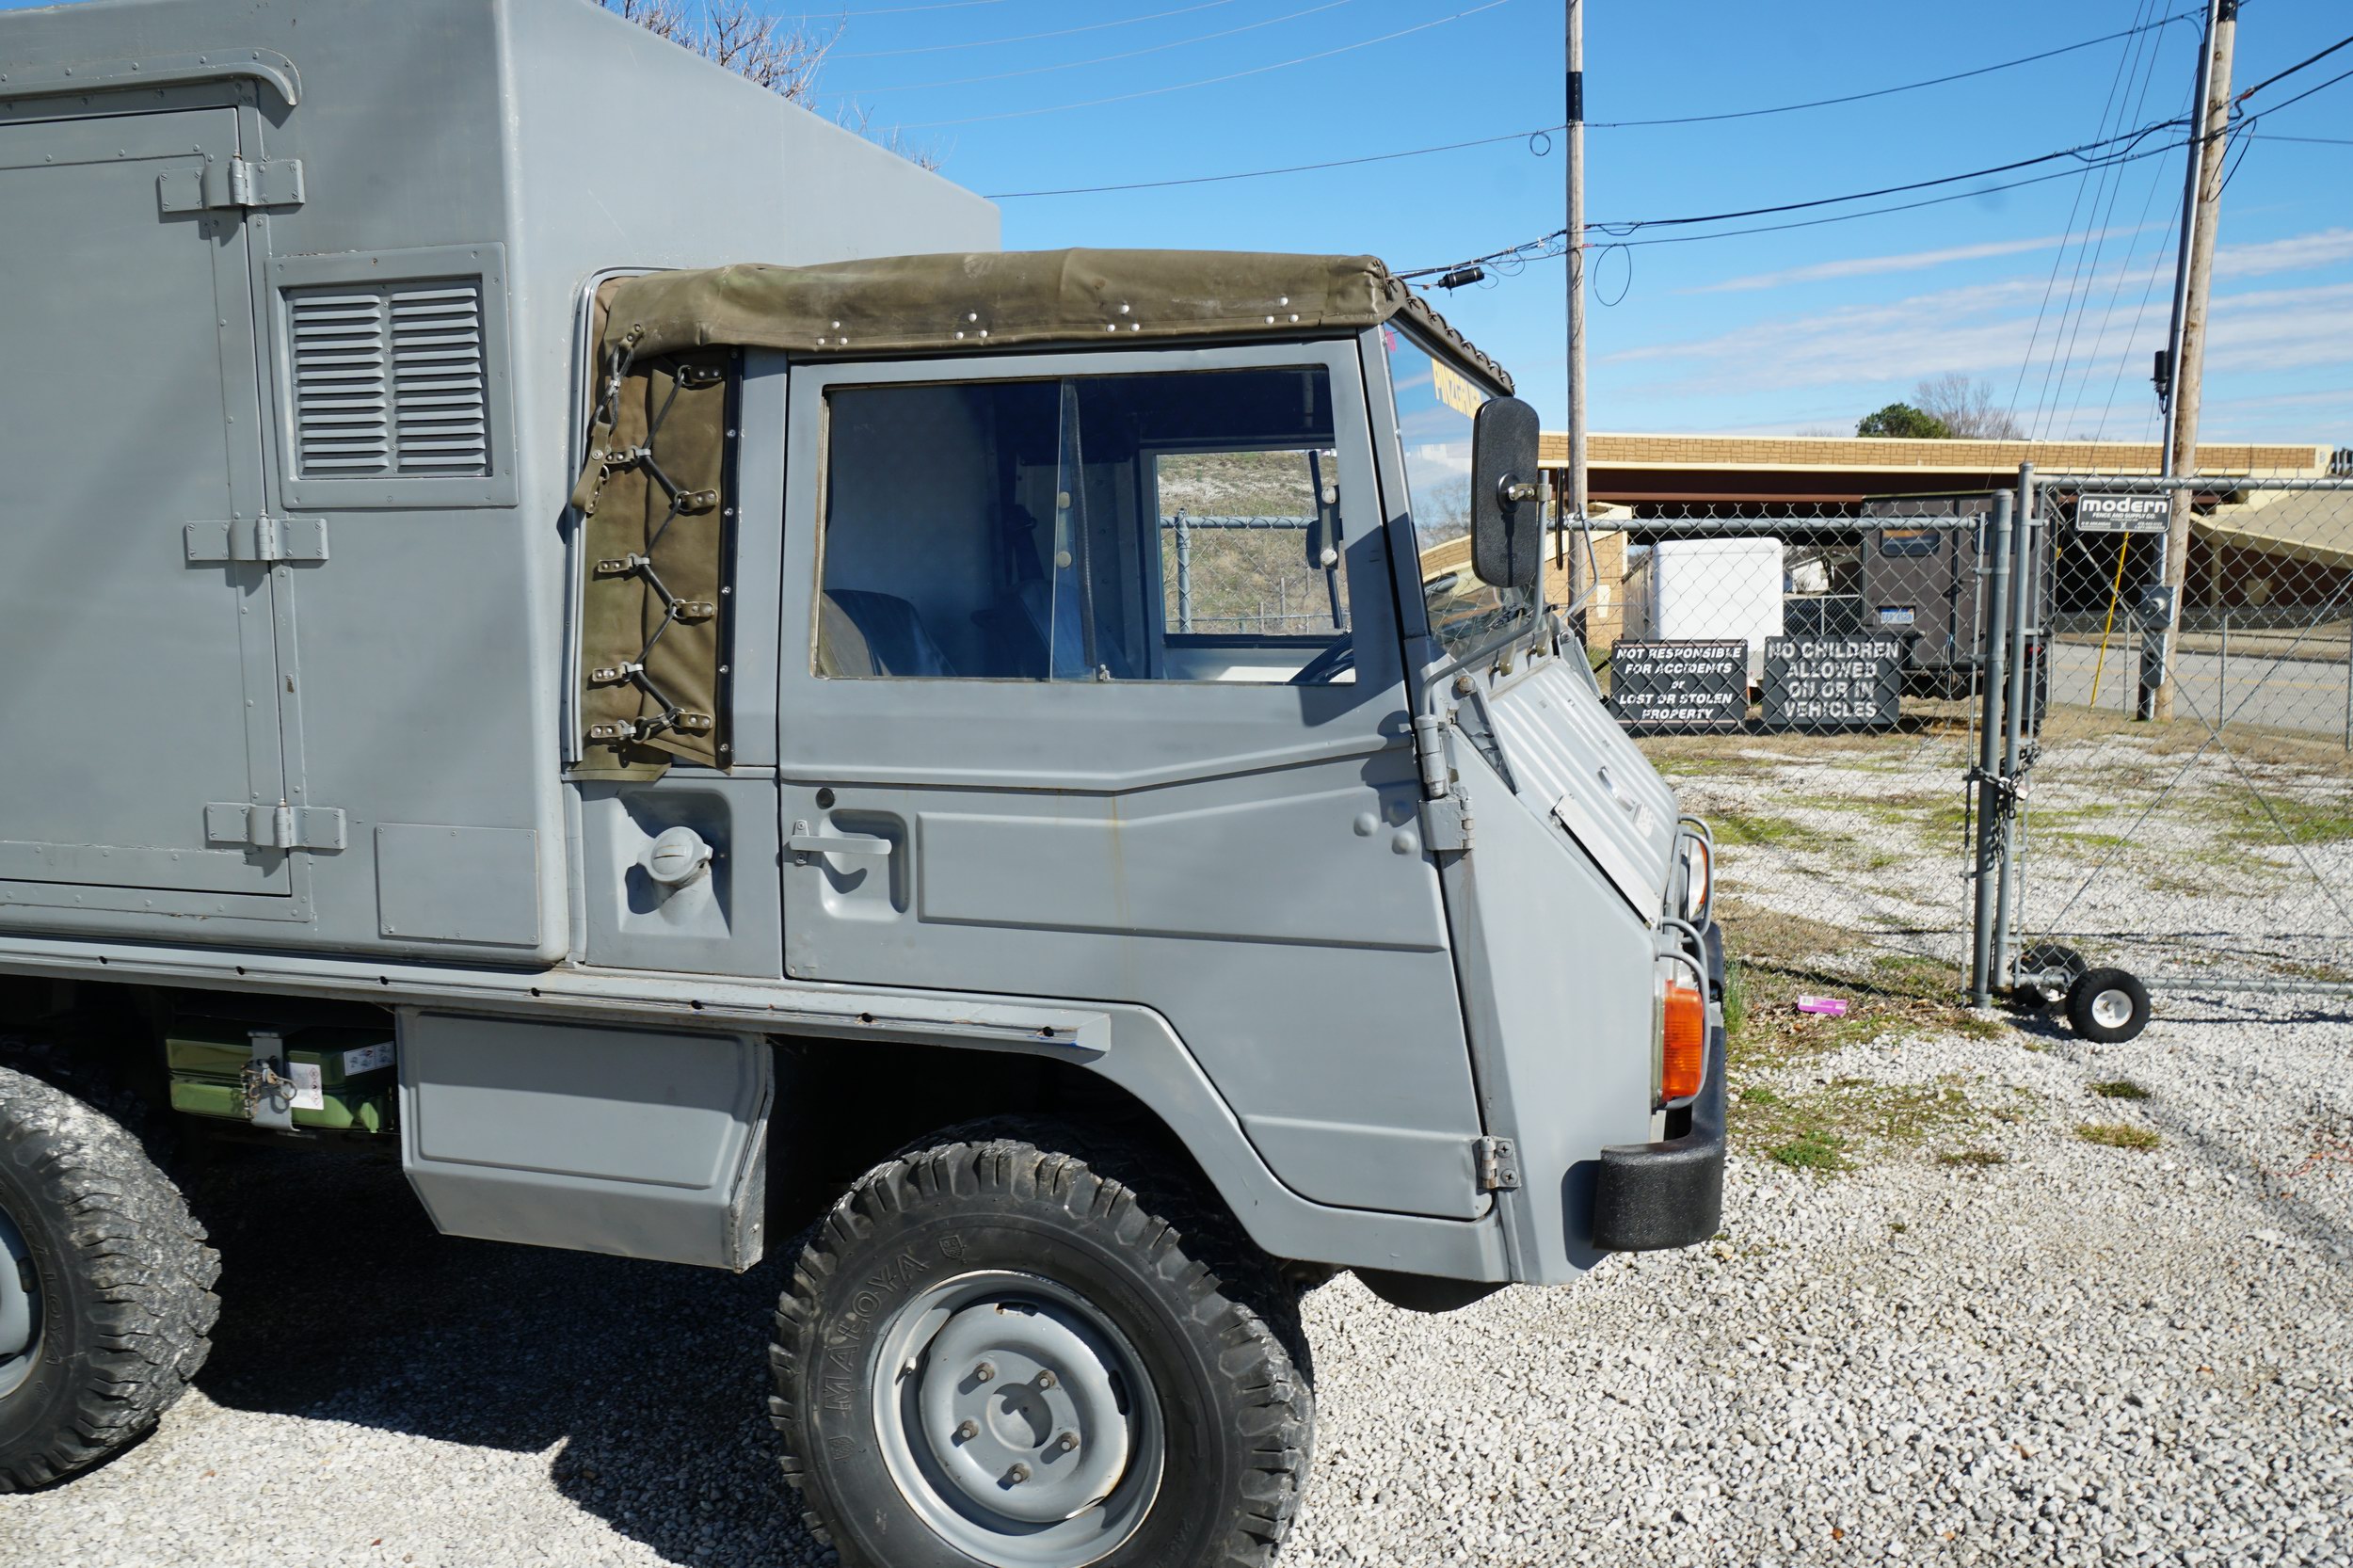 Former Swiss Army 712W Workshop Truck.  
Original ..